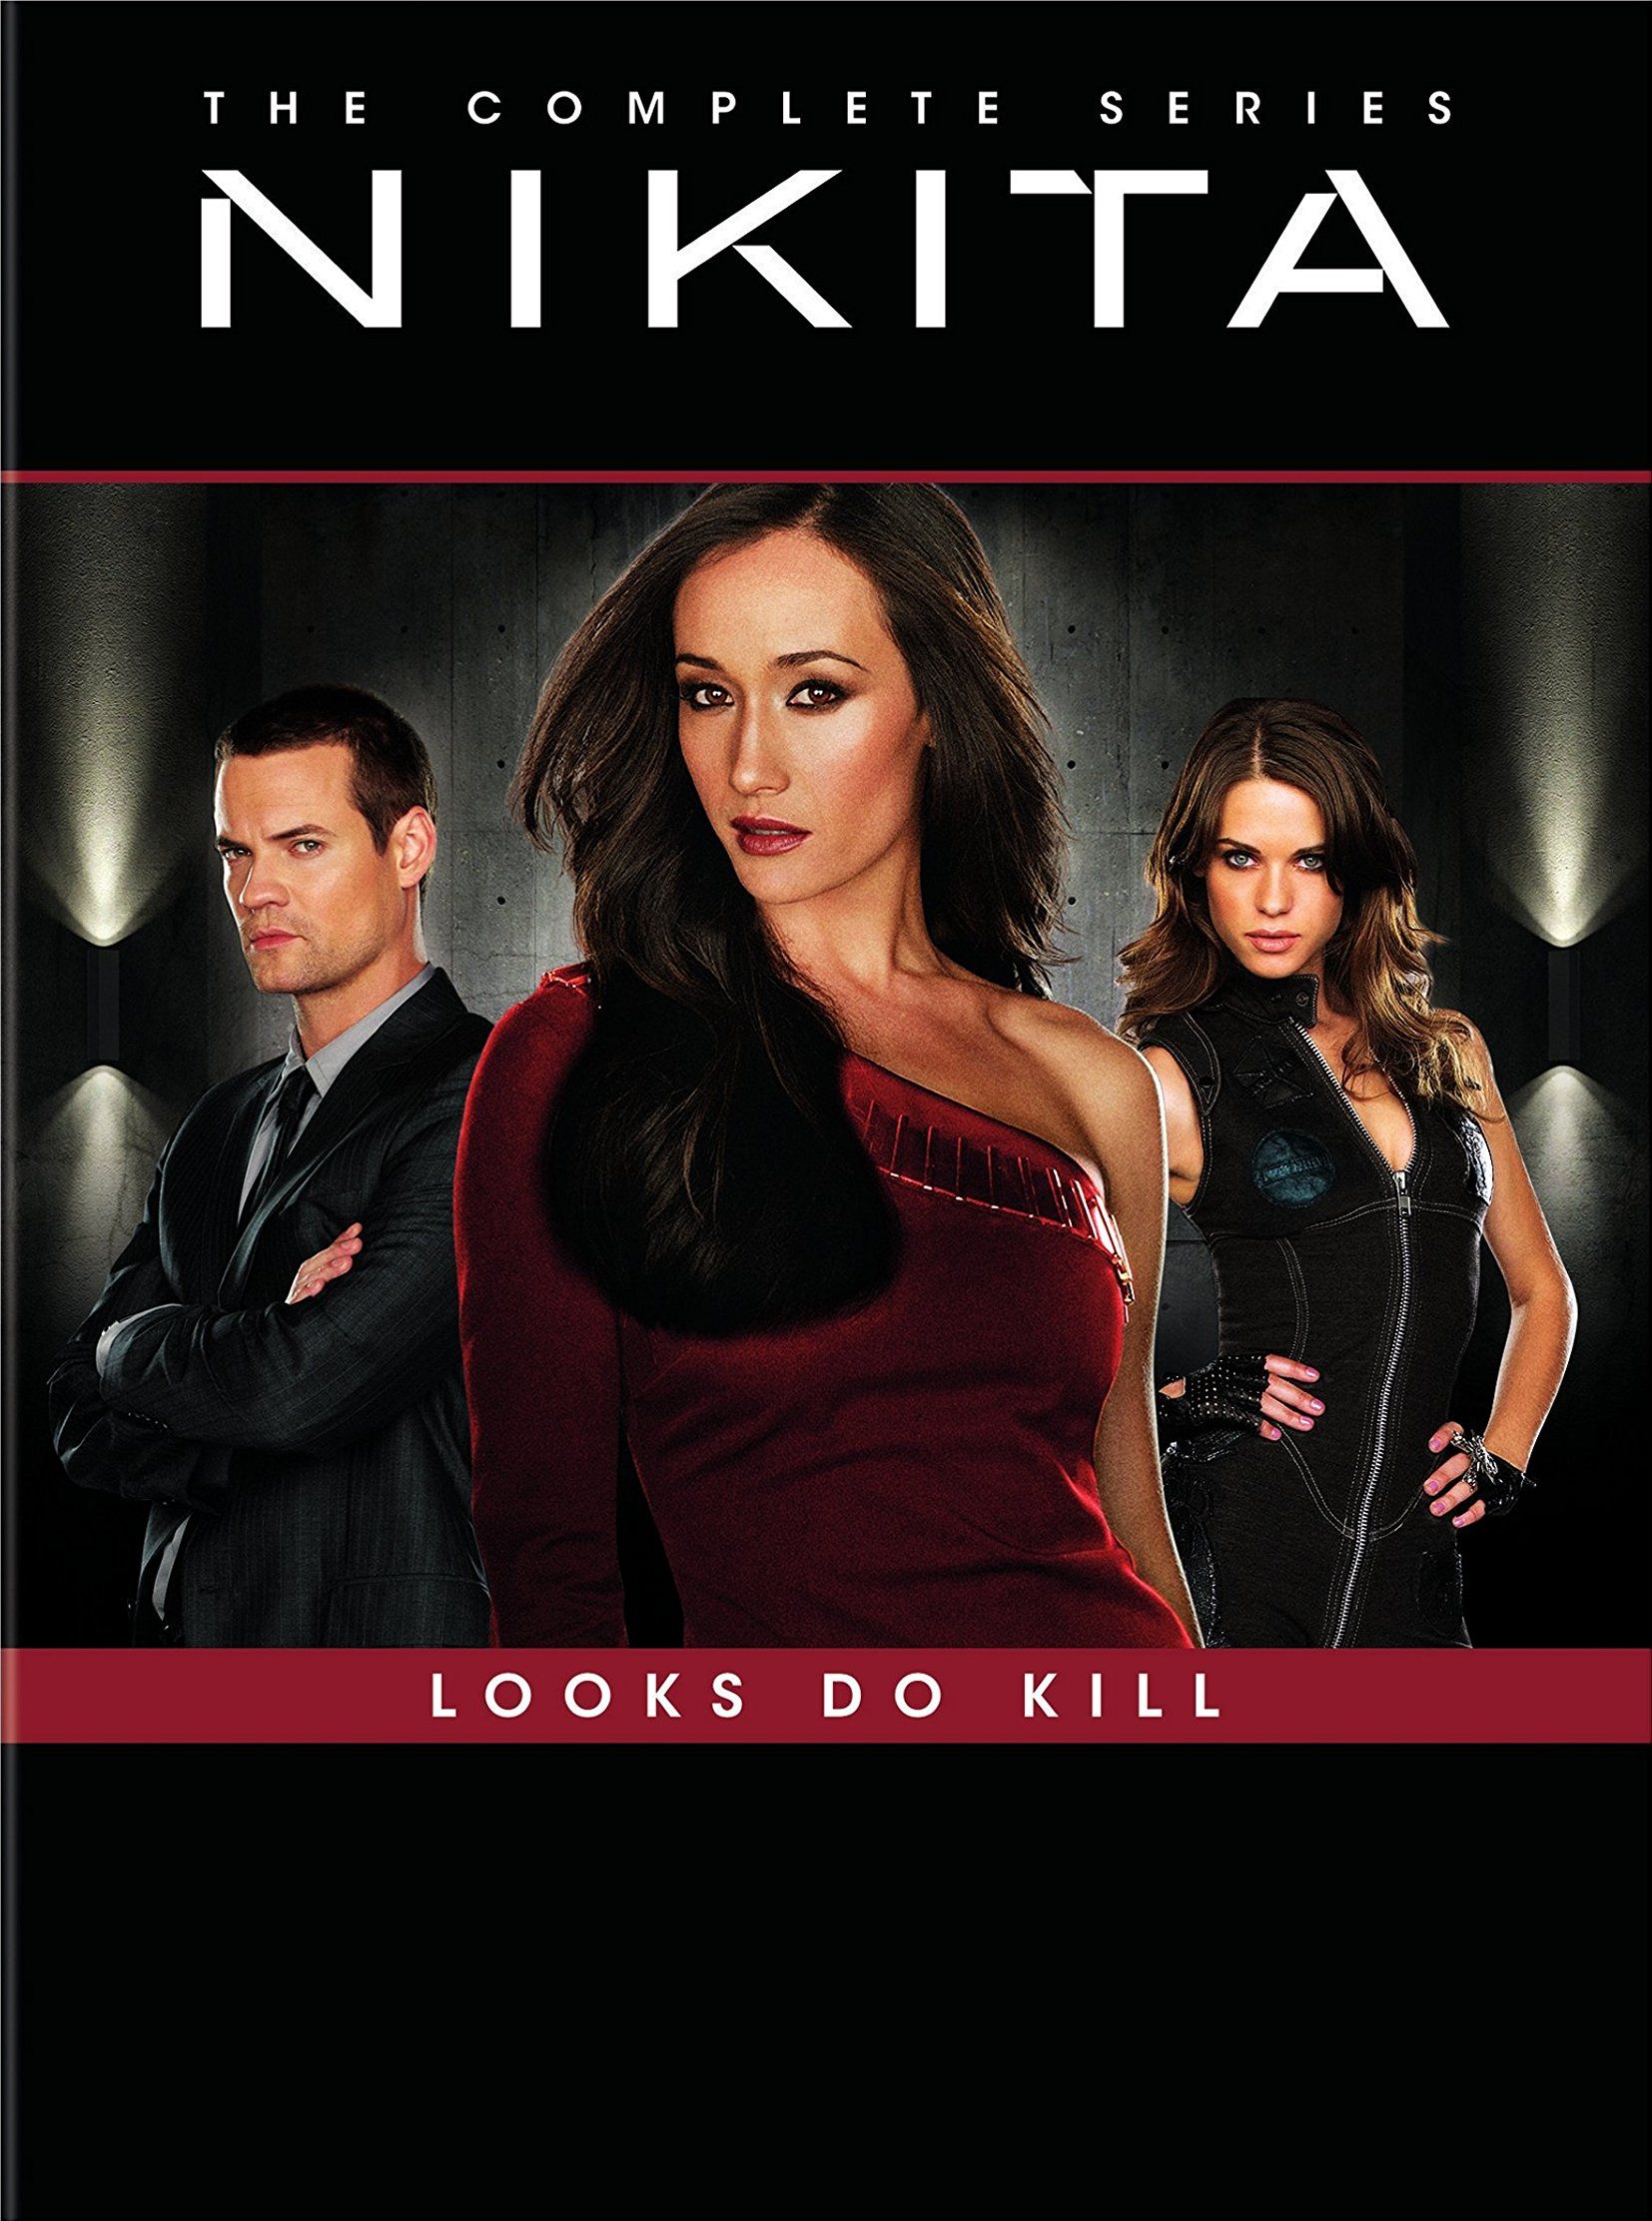 La Femme Nikita season 3 - Download Top TV Series Free